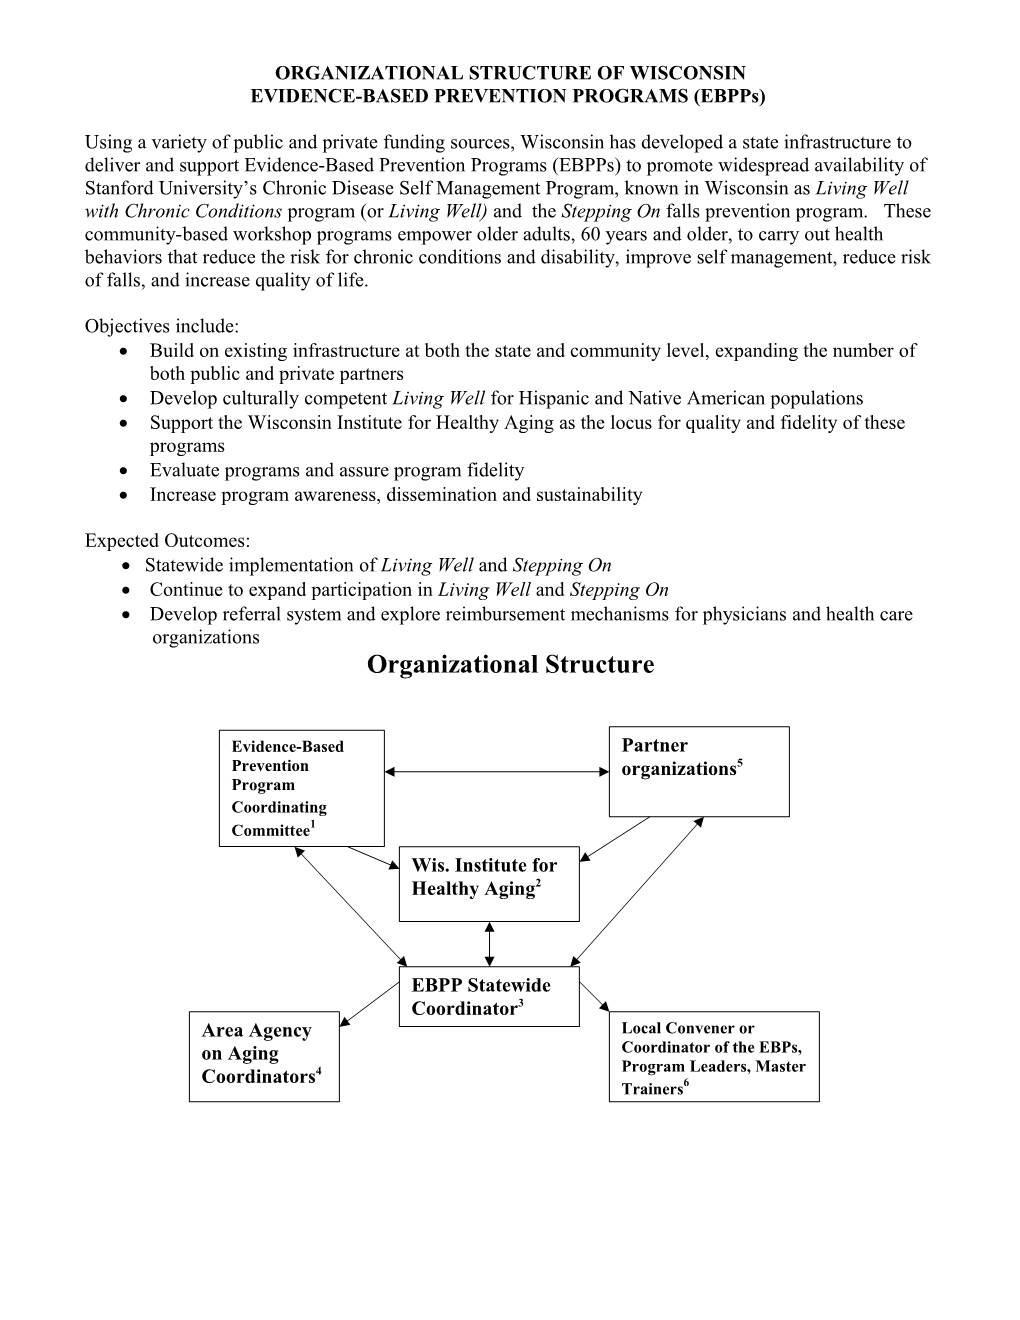 EBPP - Organizational Structure